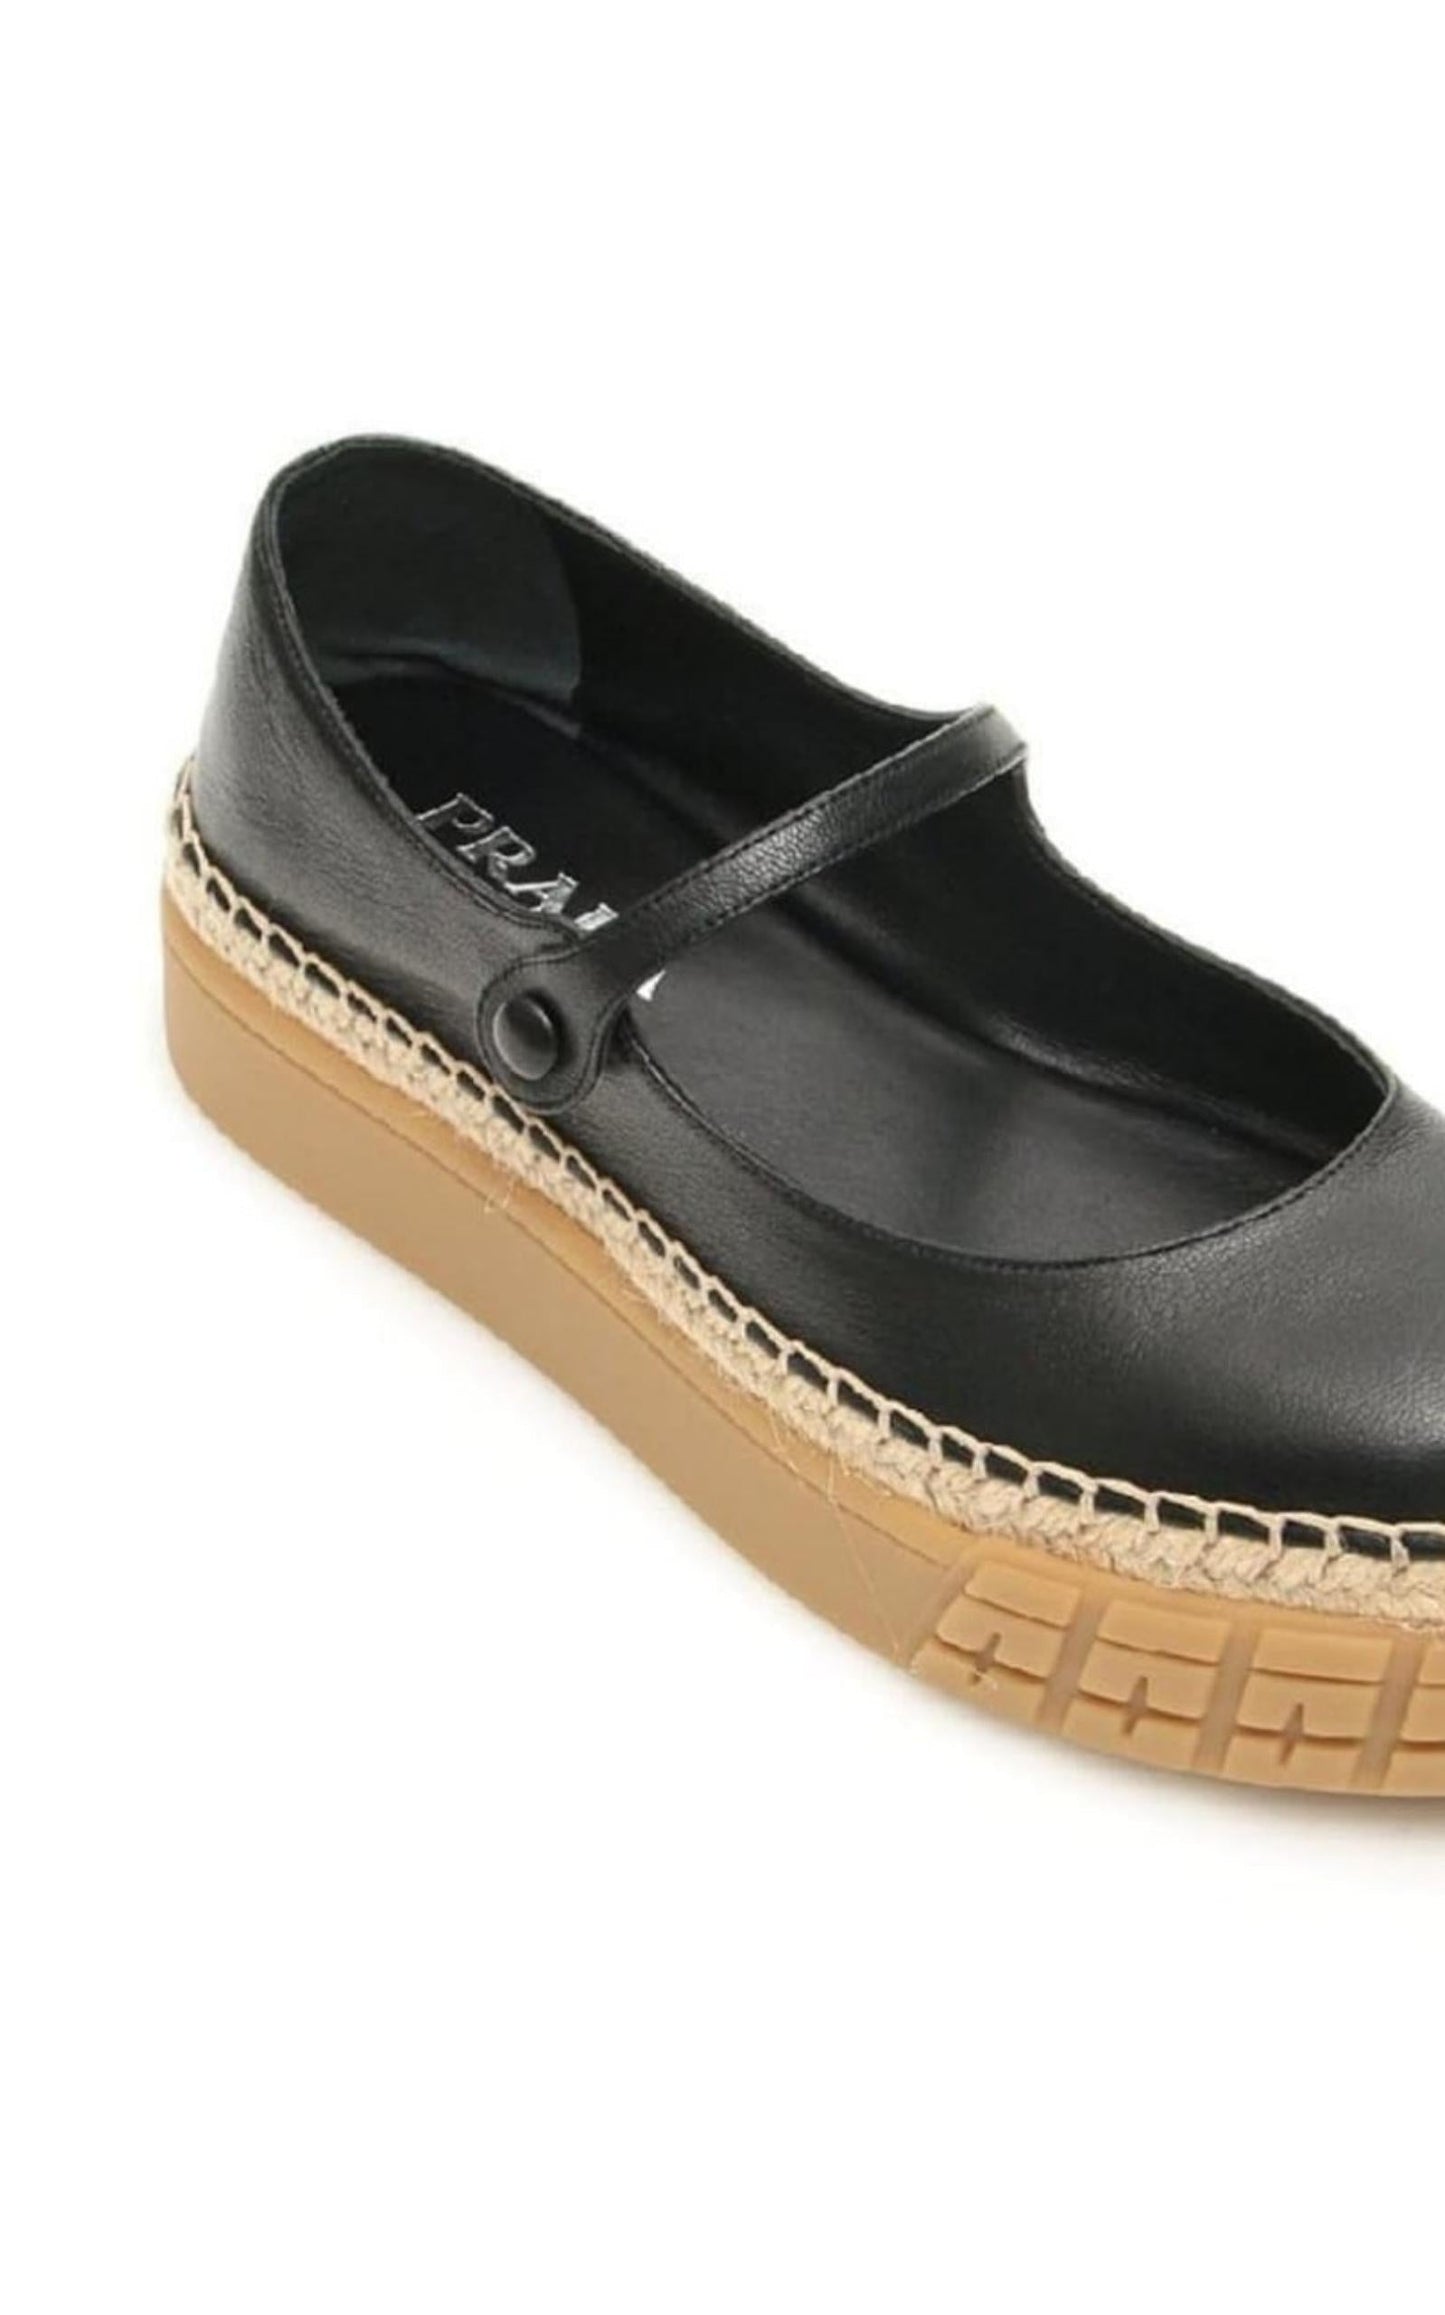  PradaPlatform Mary Janes Leather Shoes - Runway Catalog